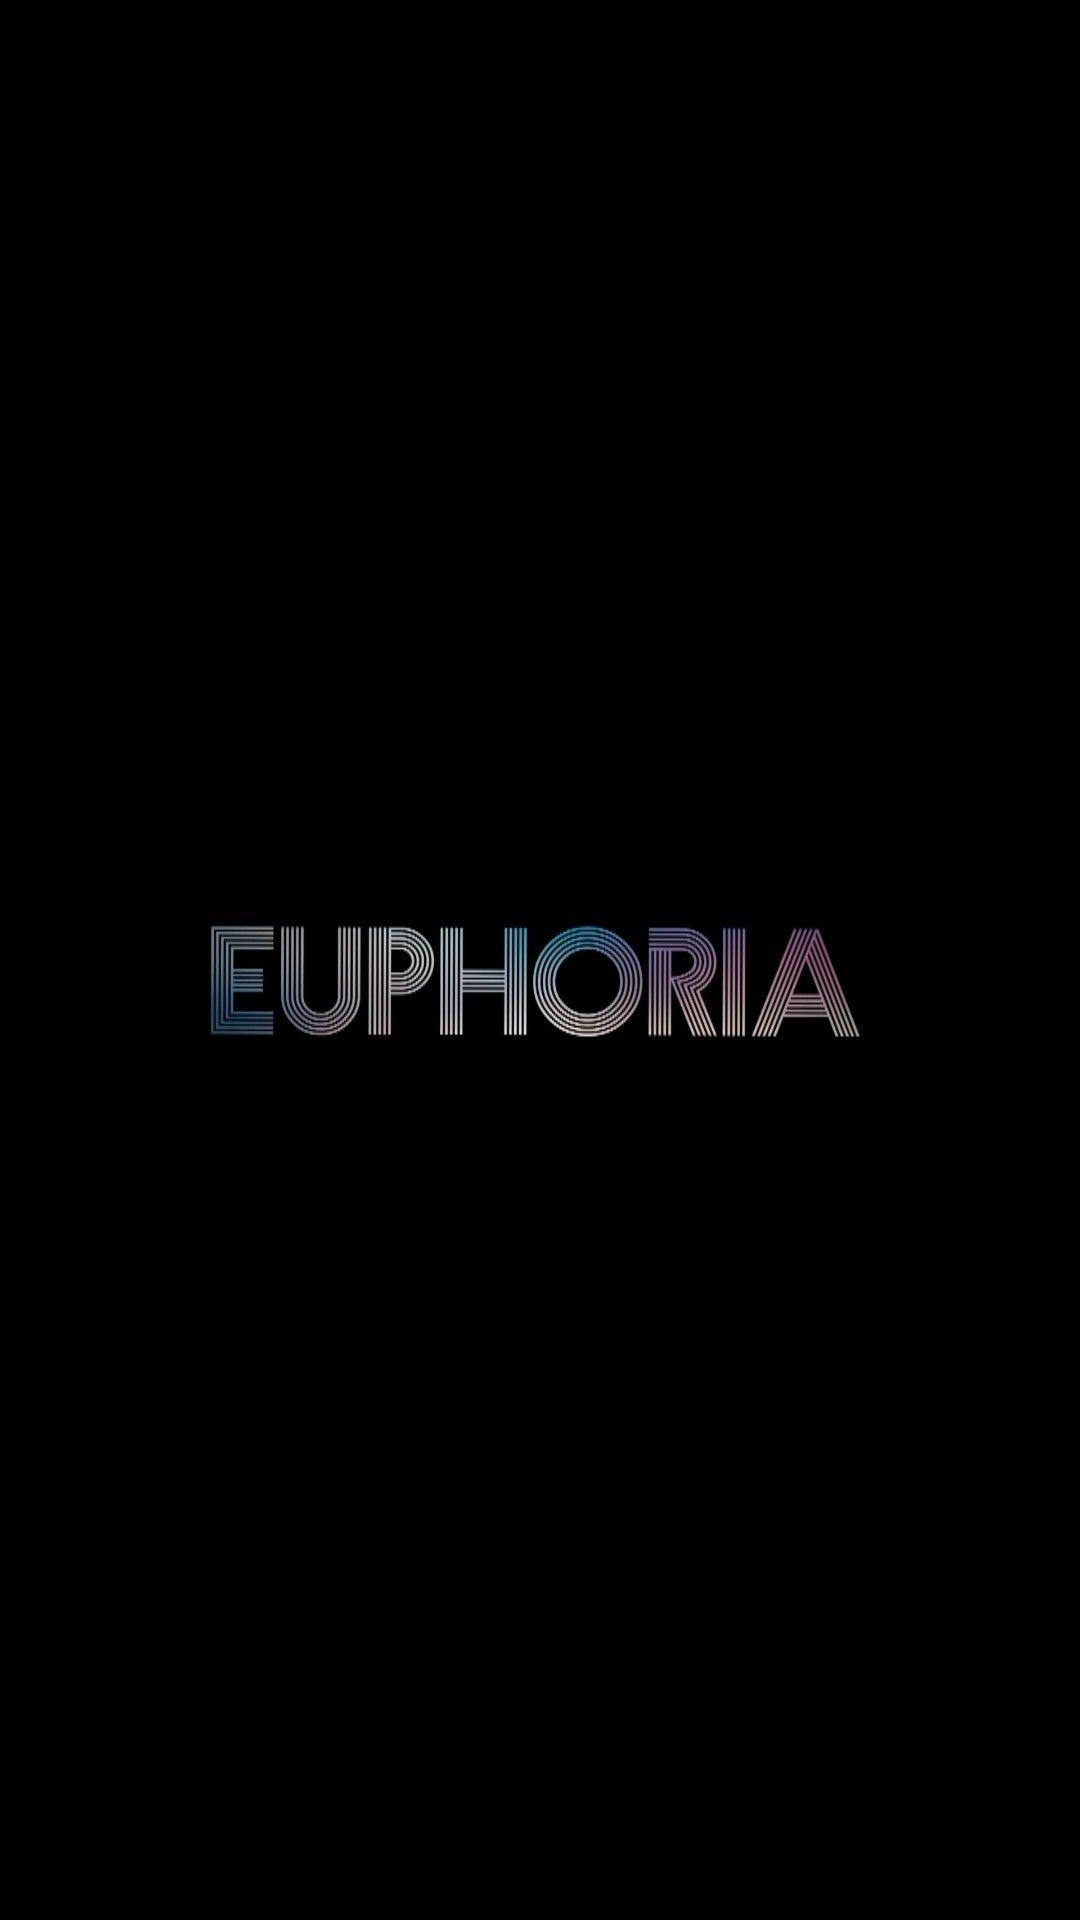 Hbo Euphoria 2019. E U P H O R I A. iPhone